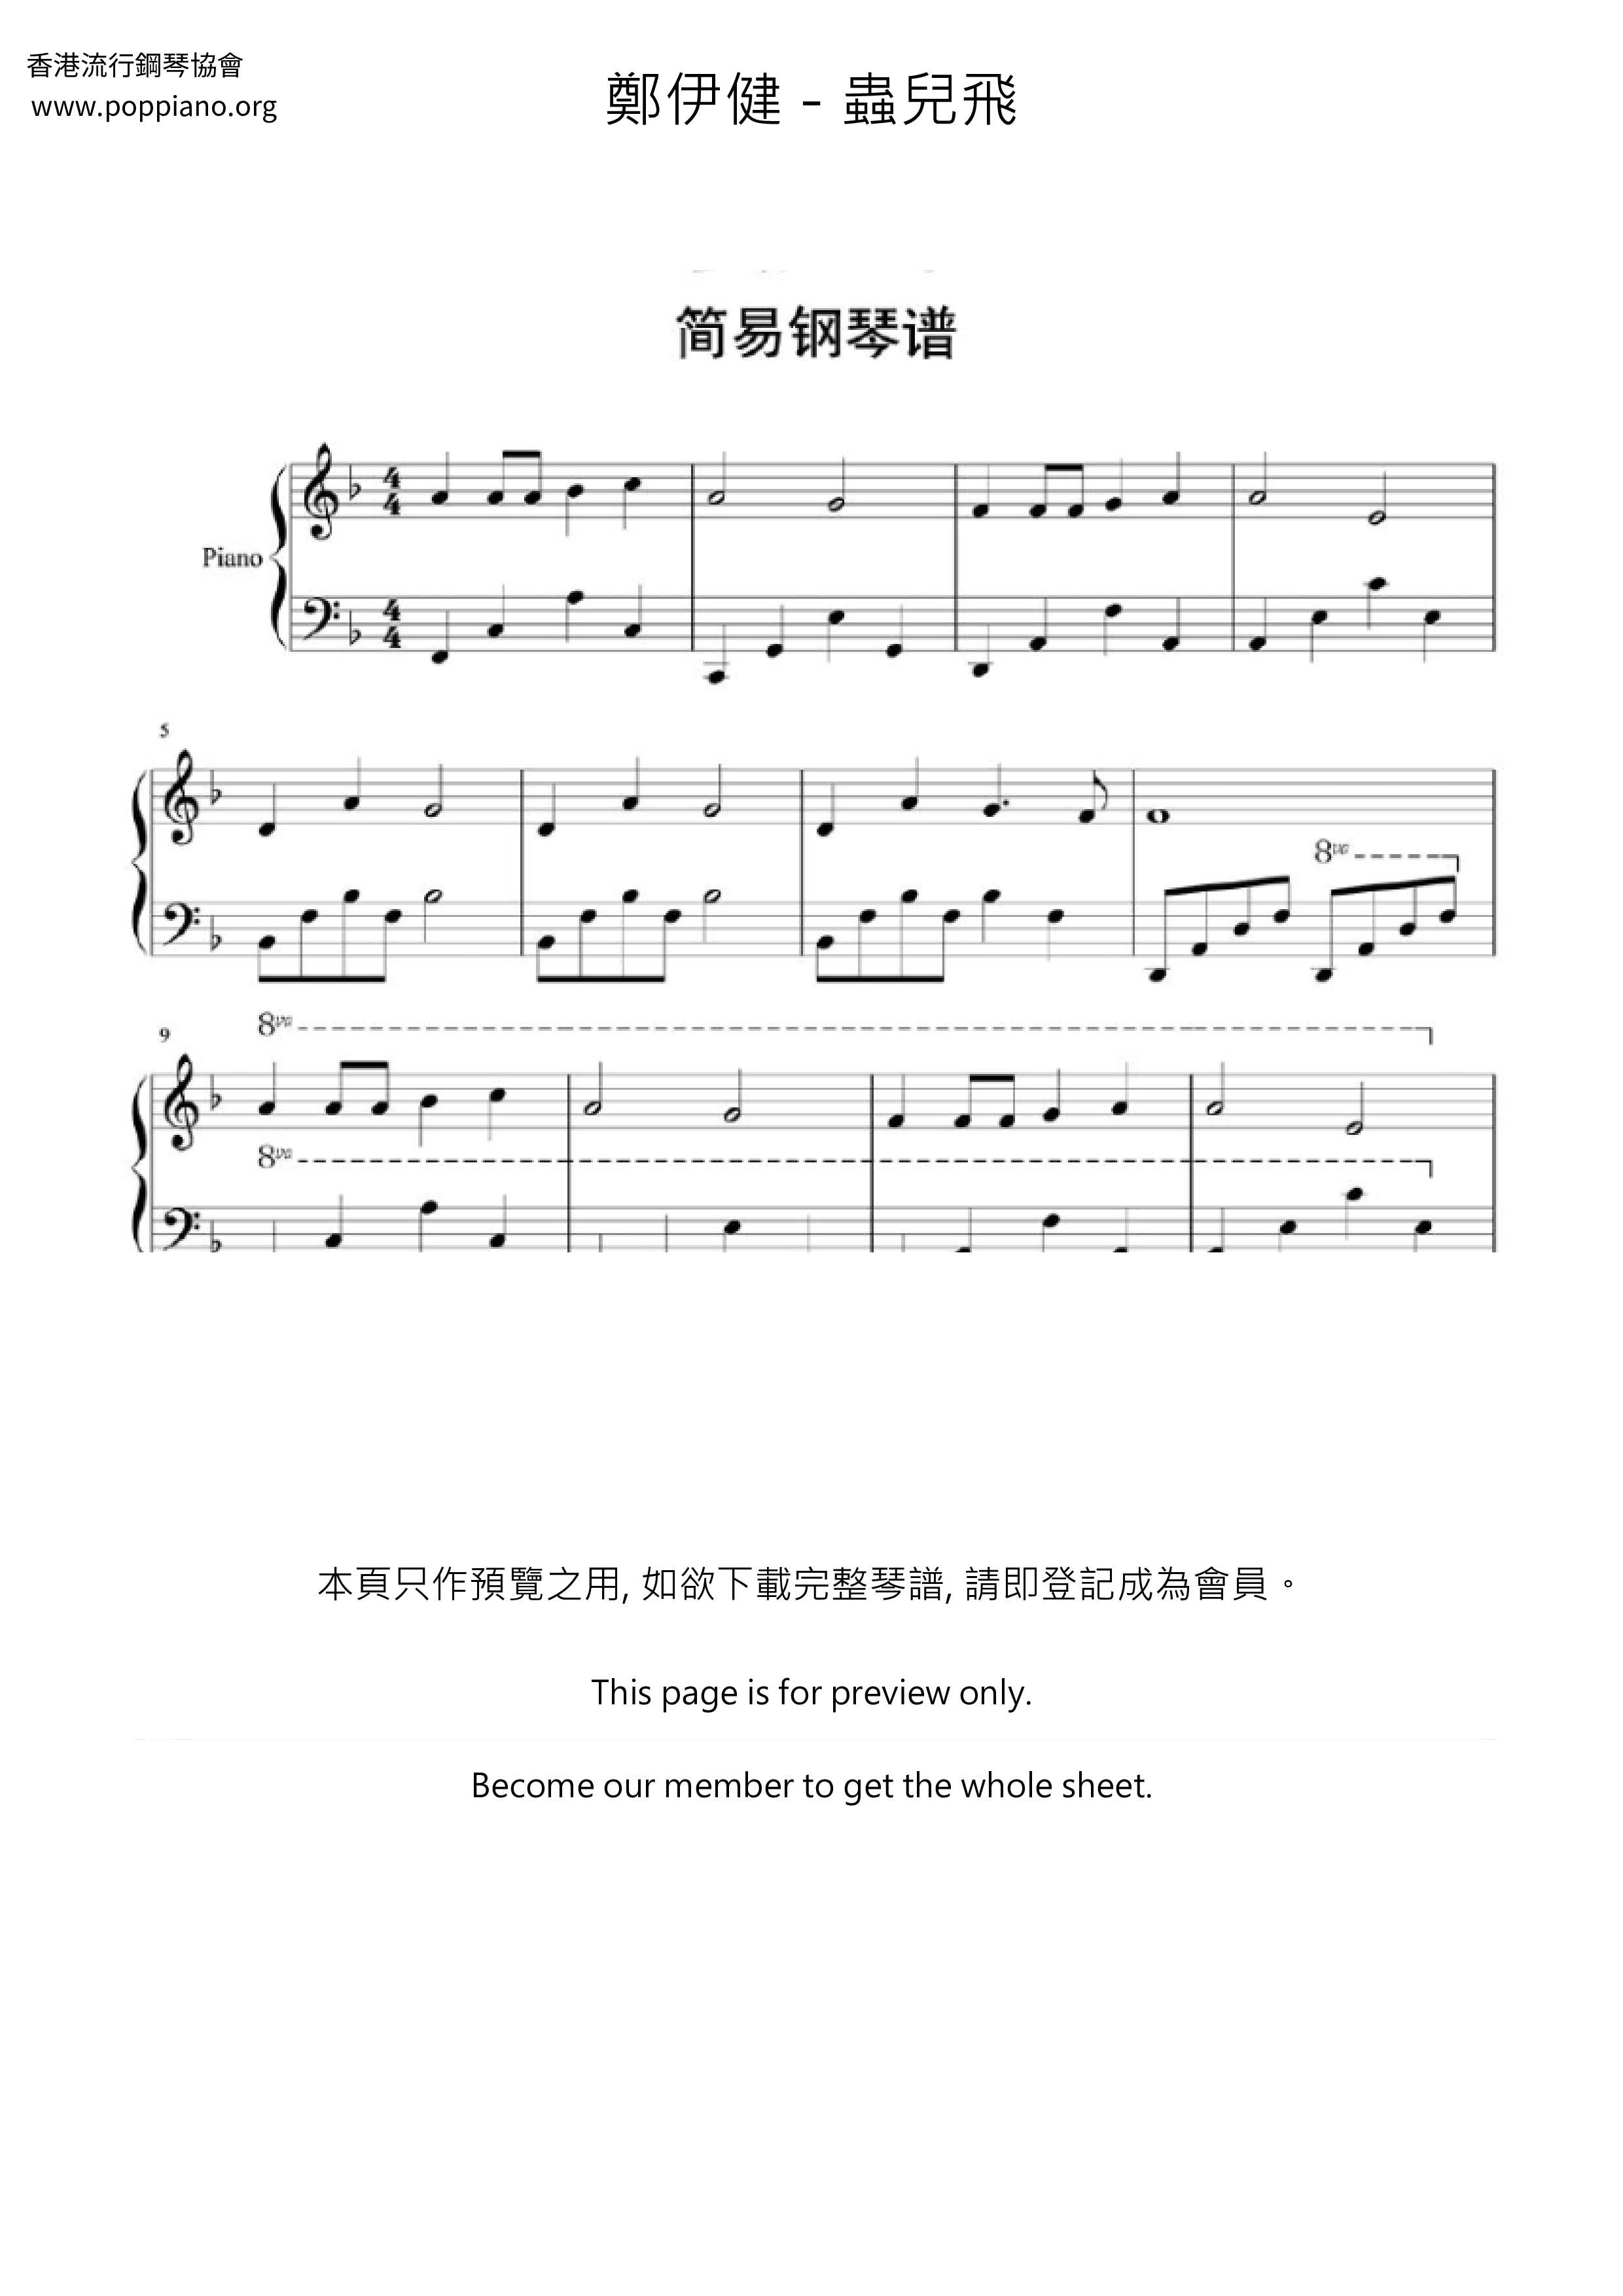 Chongerfei Score